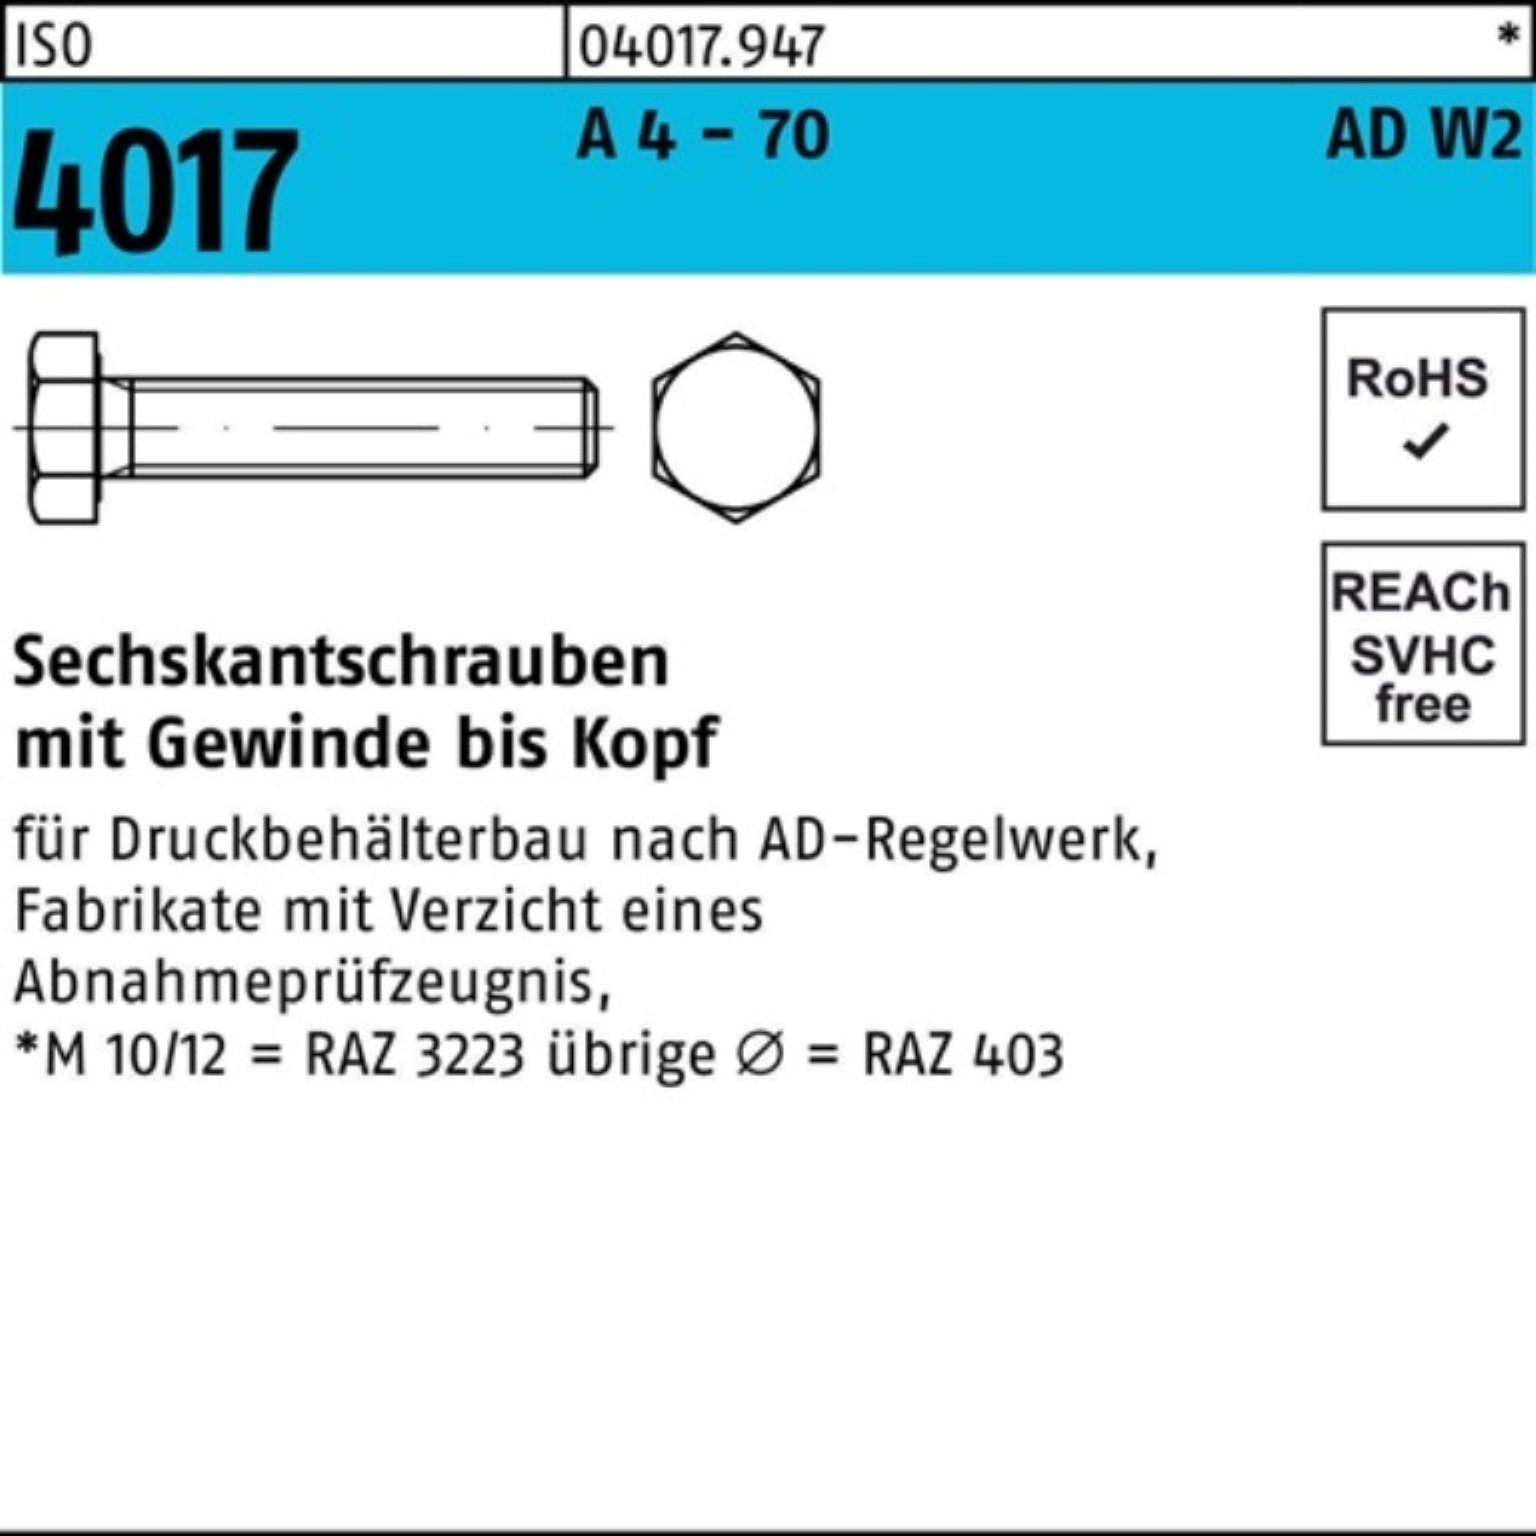 Bufab Sechskantschraube 100er Pack Sechskantschraube ISO 4017 VG M16x 70 A 4 - 70 AD-W2 25 St